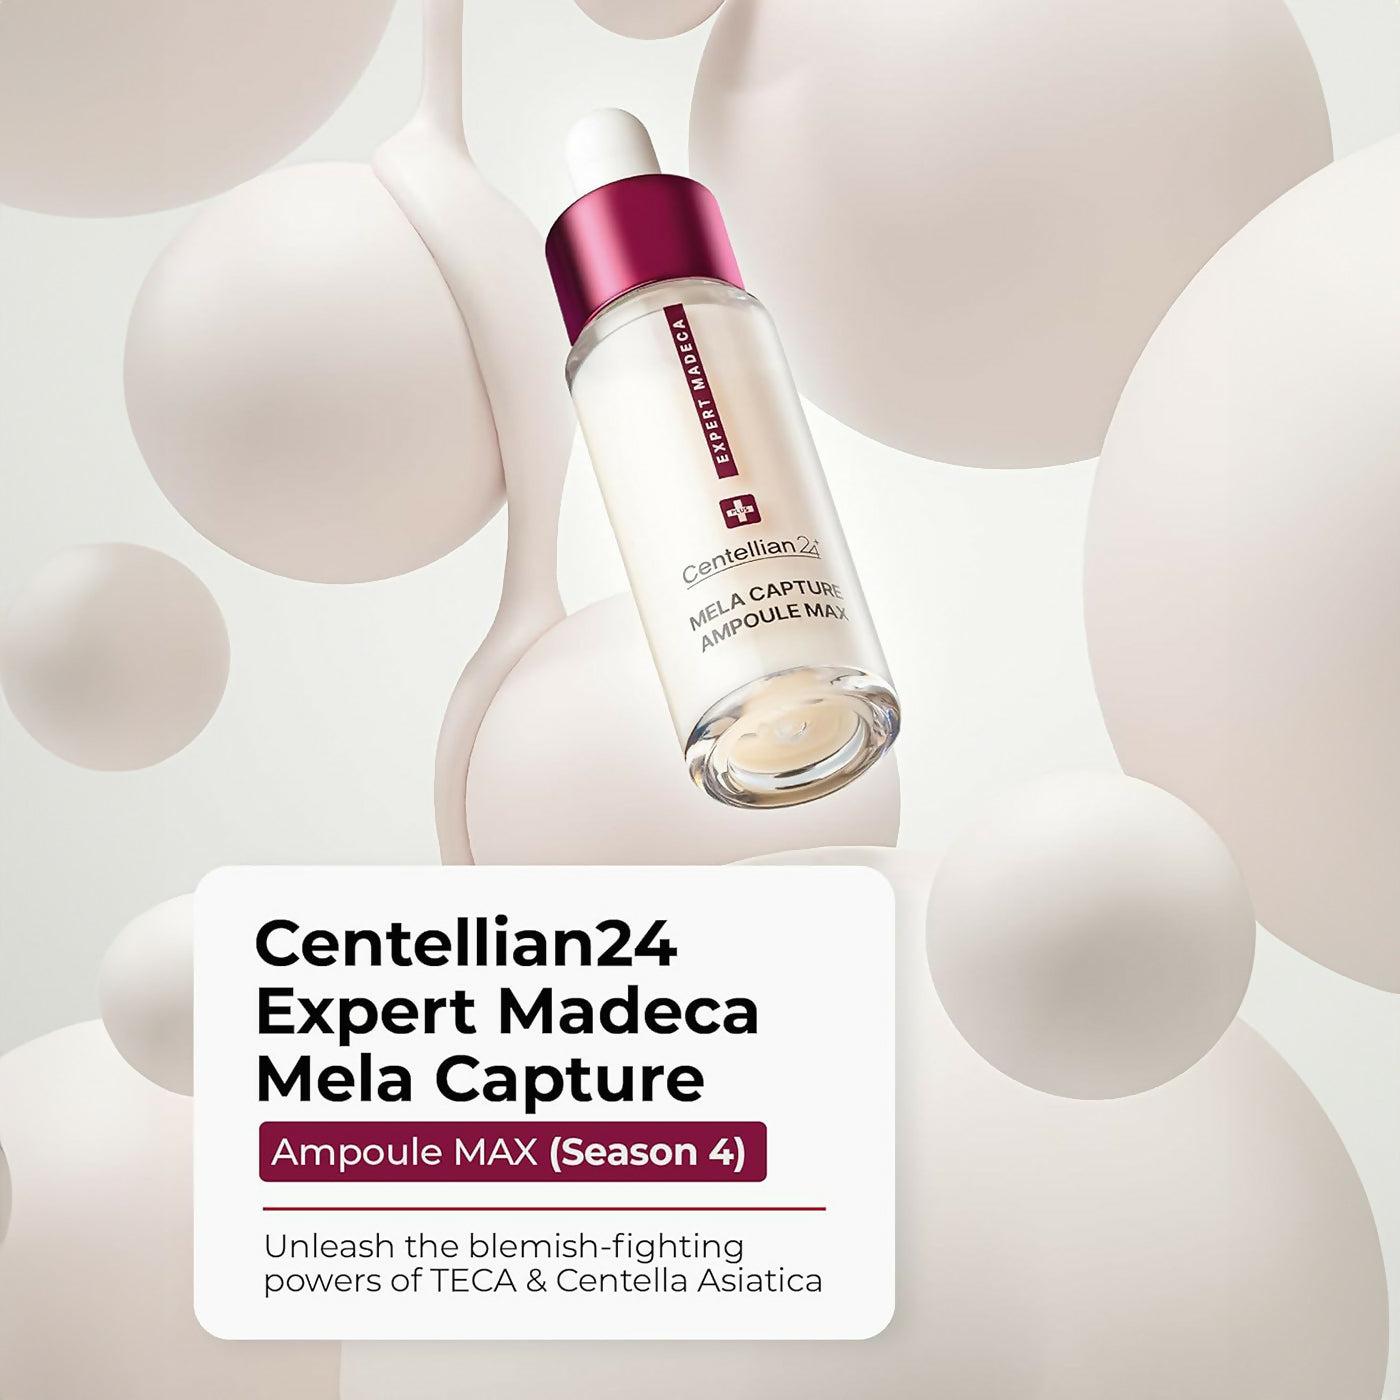 [Dongkook Pharmaceutical] Centellian24 (Season 4) Expert Madeca Melacapture Ampoule Max x 3 + [*Free Gift] Centellian 24 Derma Mask 3 Intensive 10 sheets